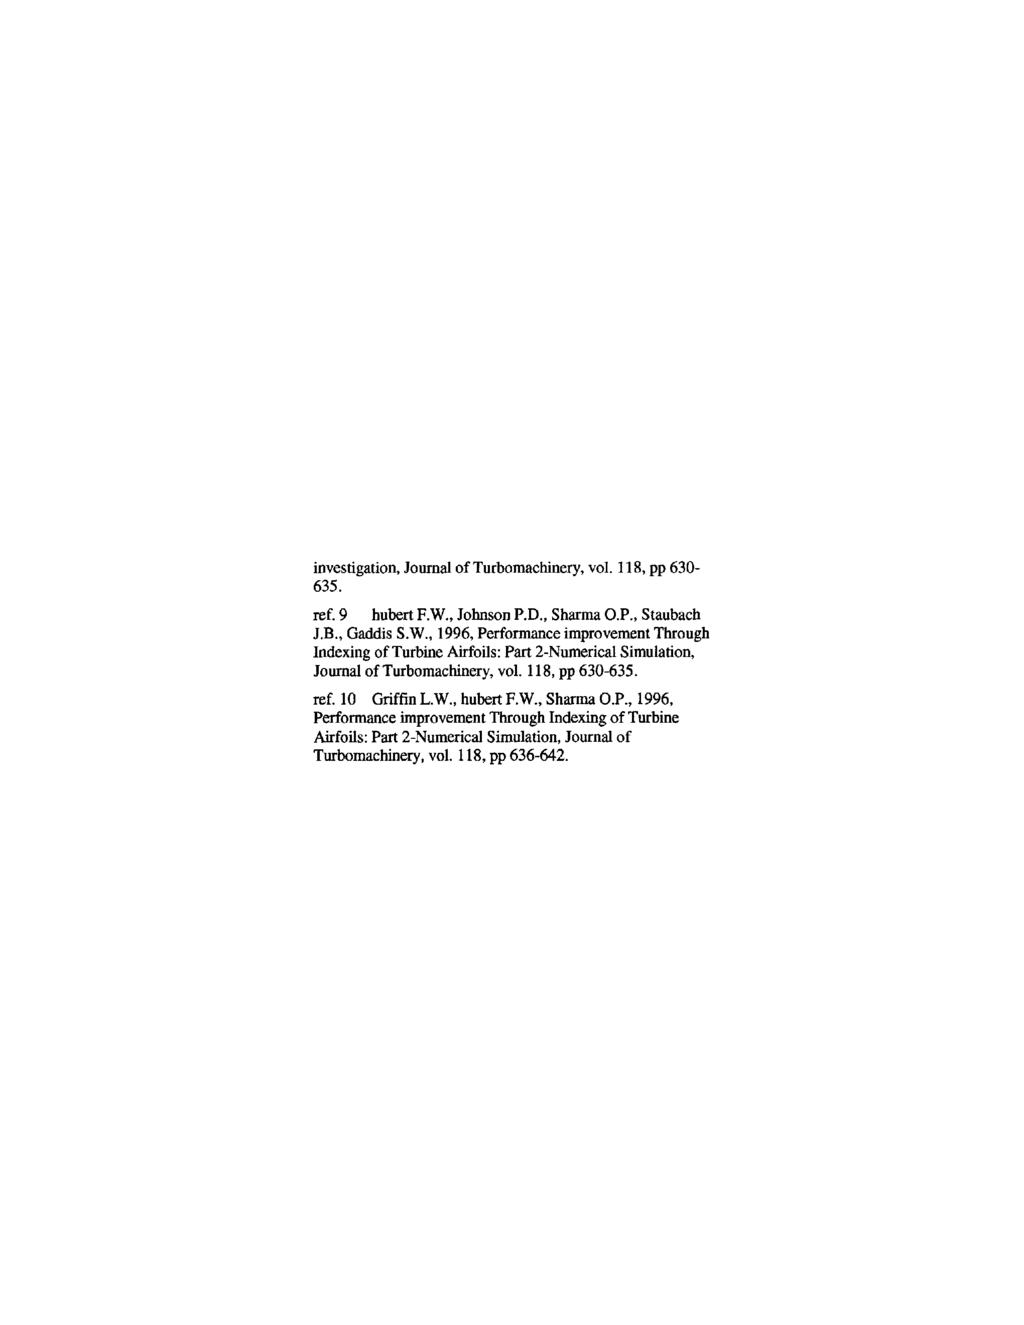 investigation, Journal of Turbomachinery, vol. 118, pp 630-635. ref. 9 hubert F.W.